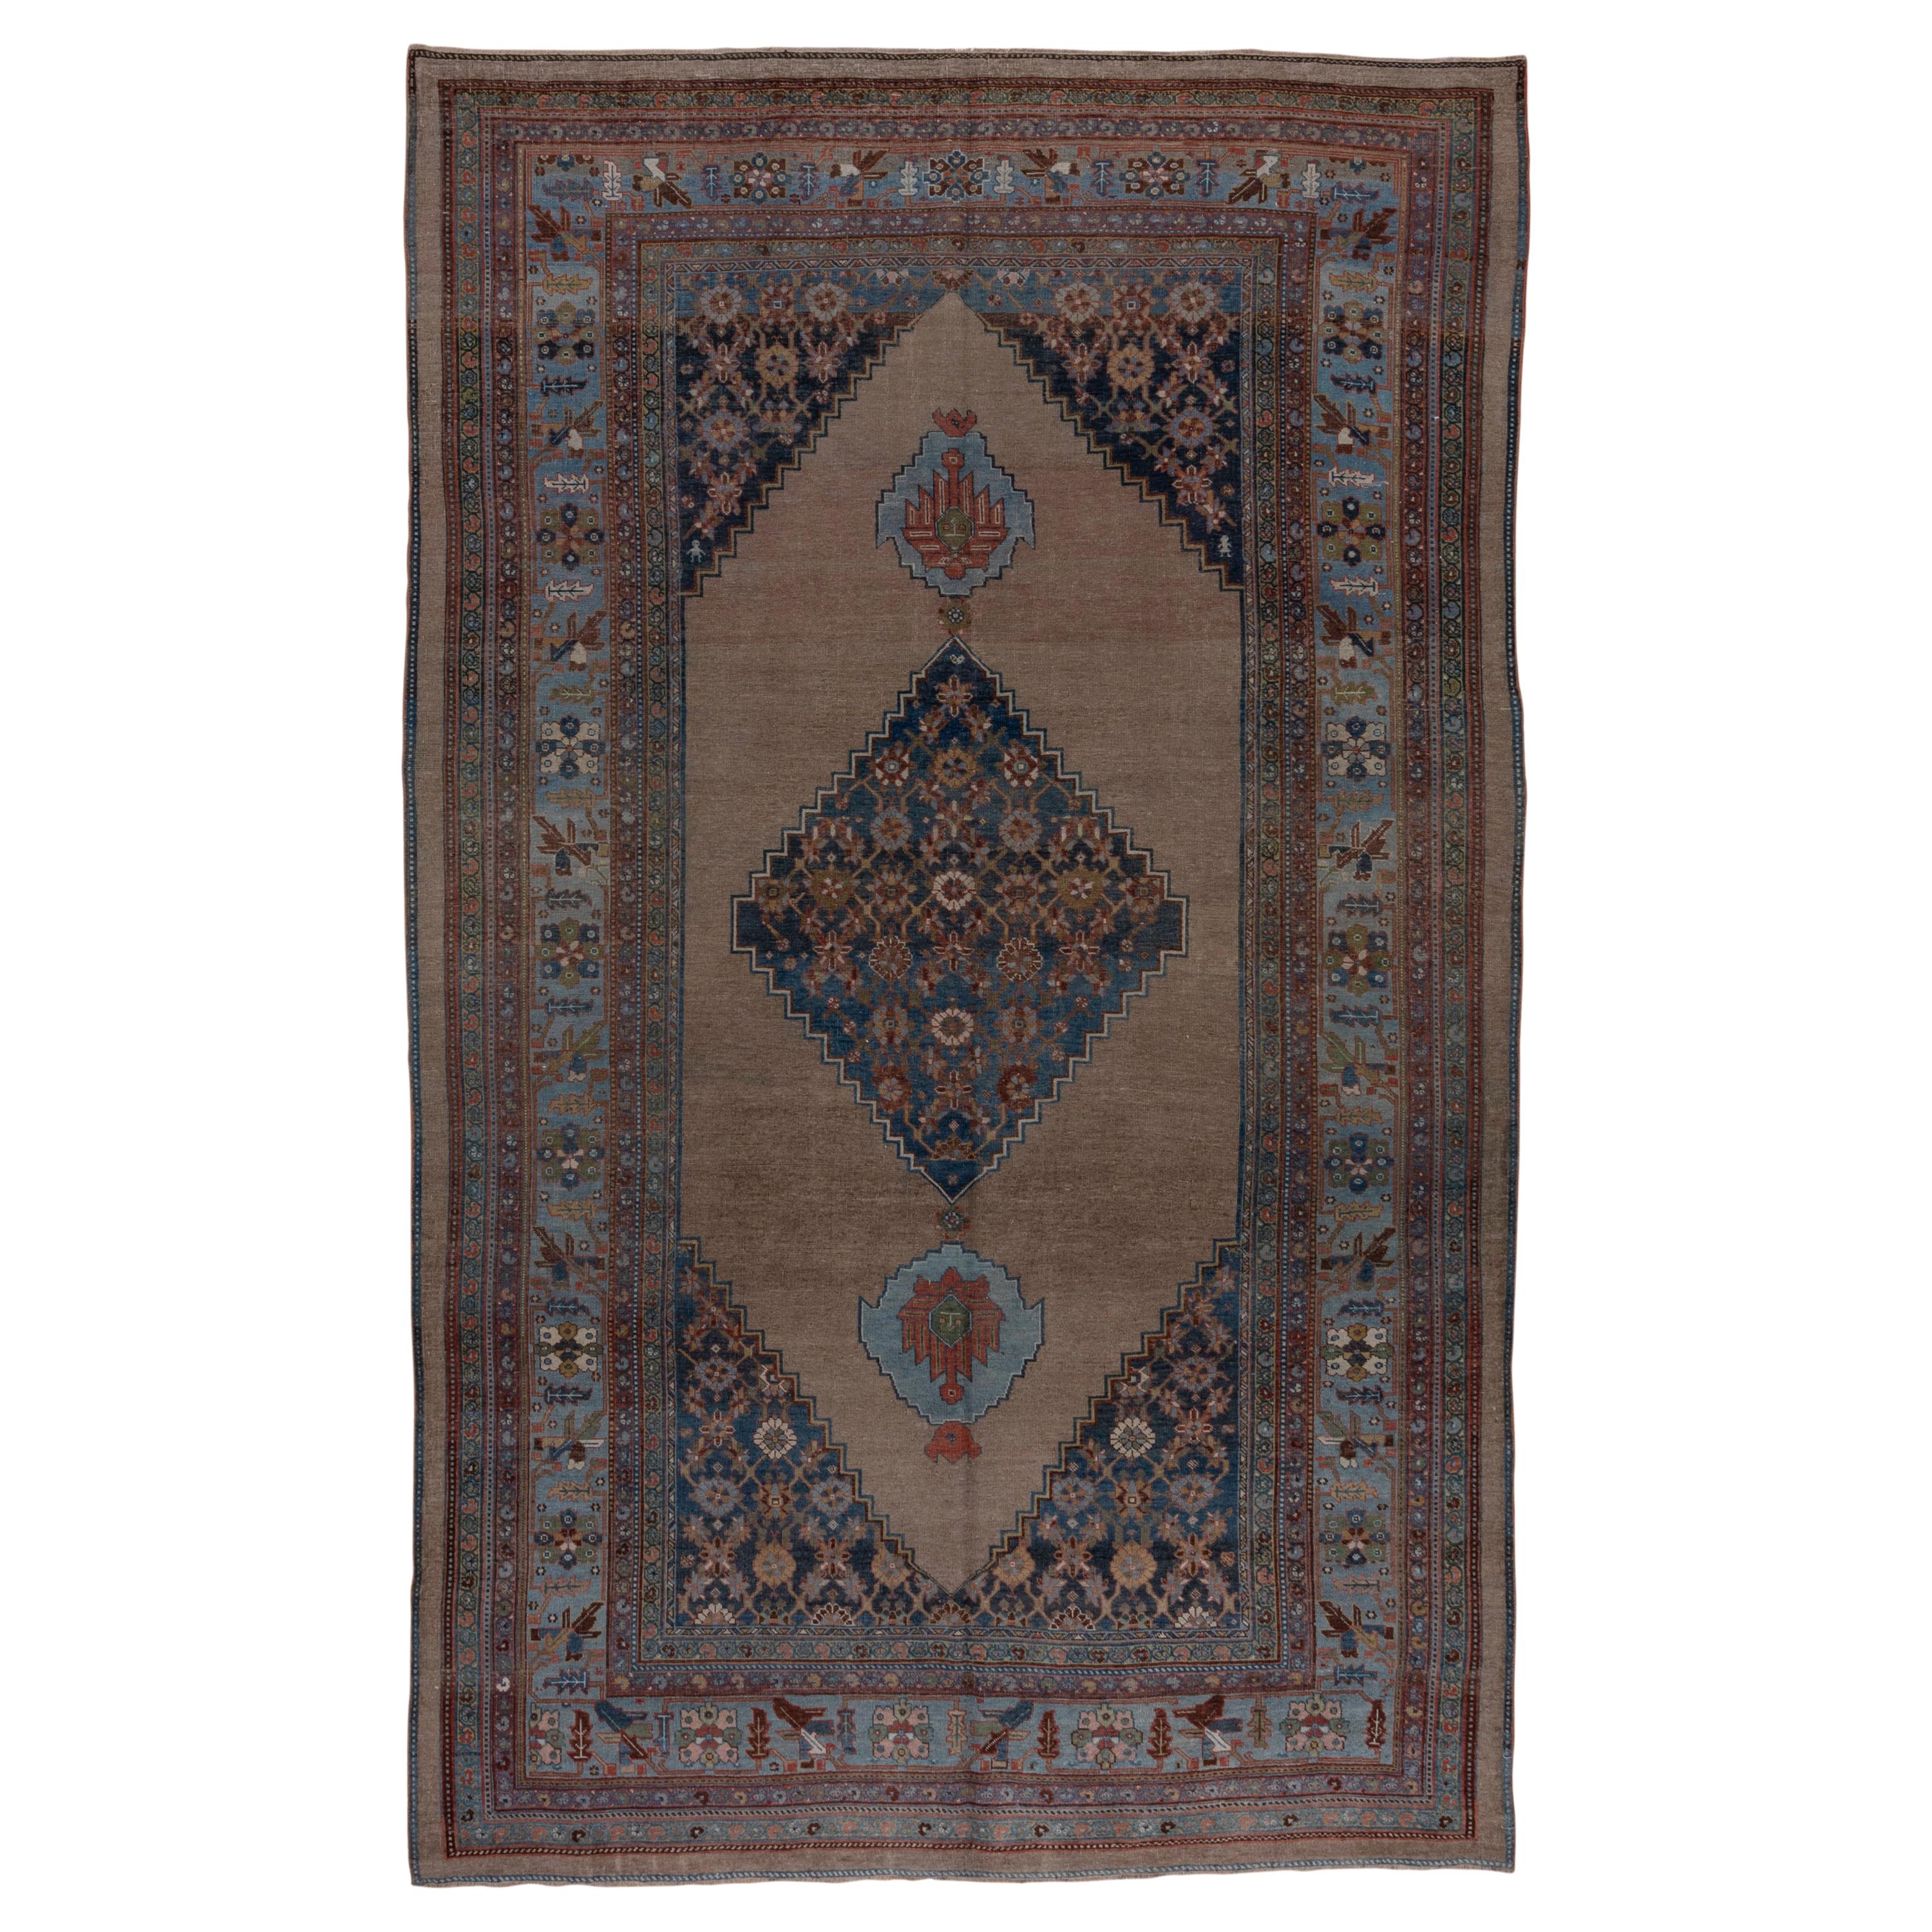 Antique Tribal Persian Bidjar Carpet, Light Blue Detailed Border, Brown Field